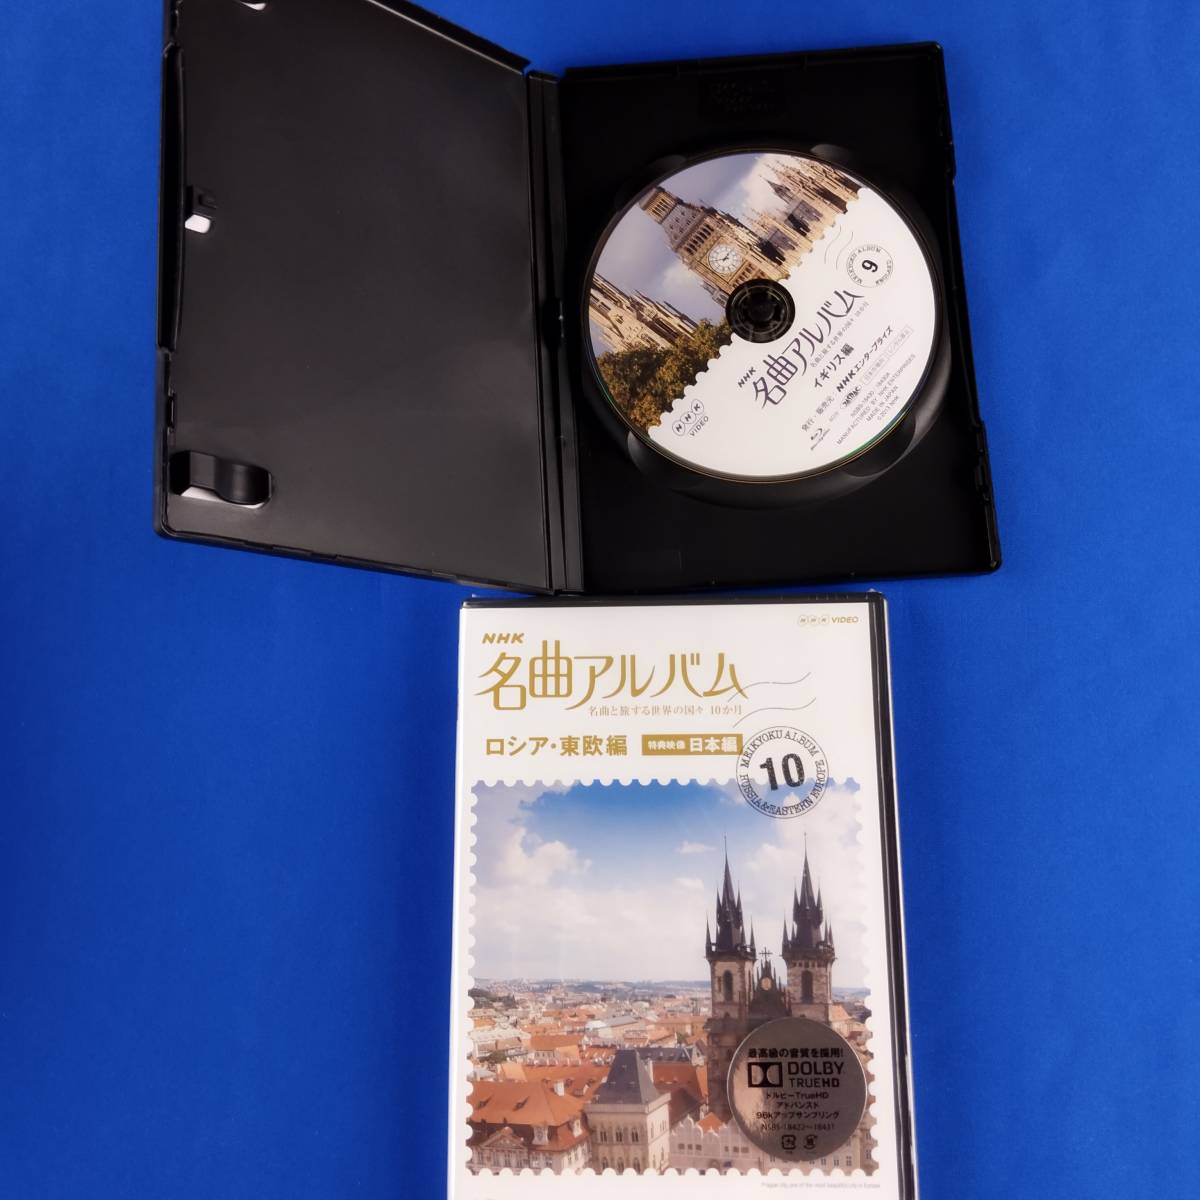 4SD1 Blu-ray NHK шедевр альбом шедевр .. делать мир. страна .10. месяц 